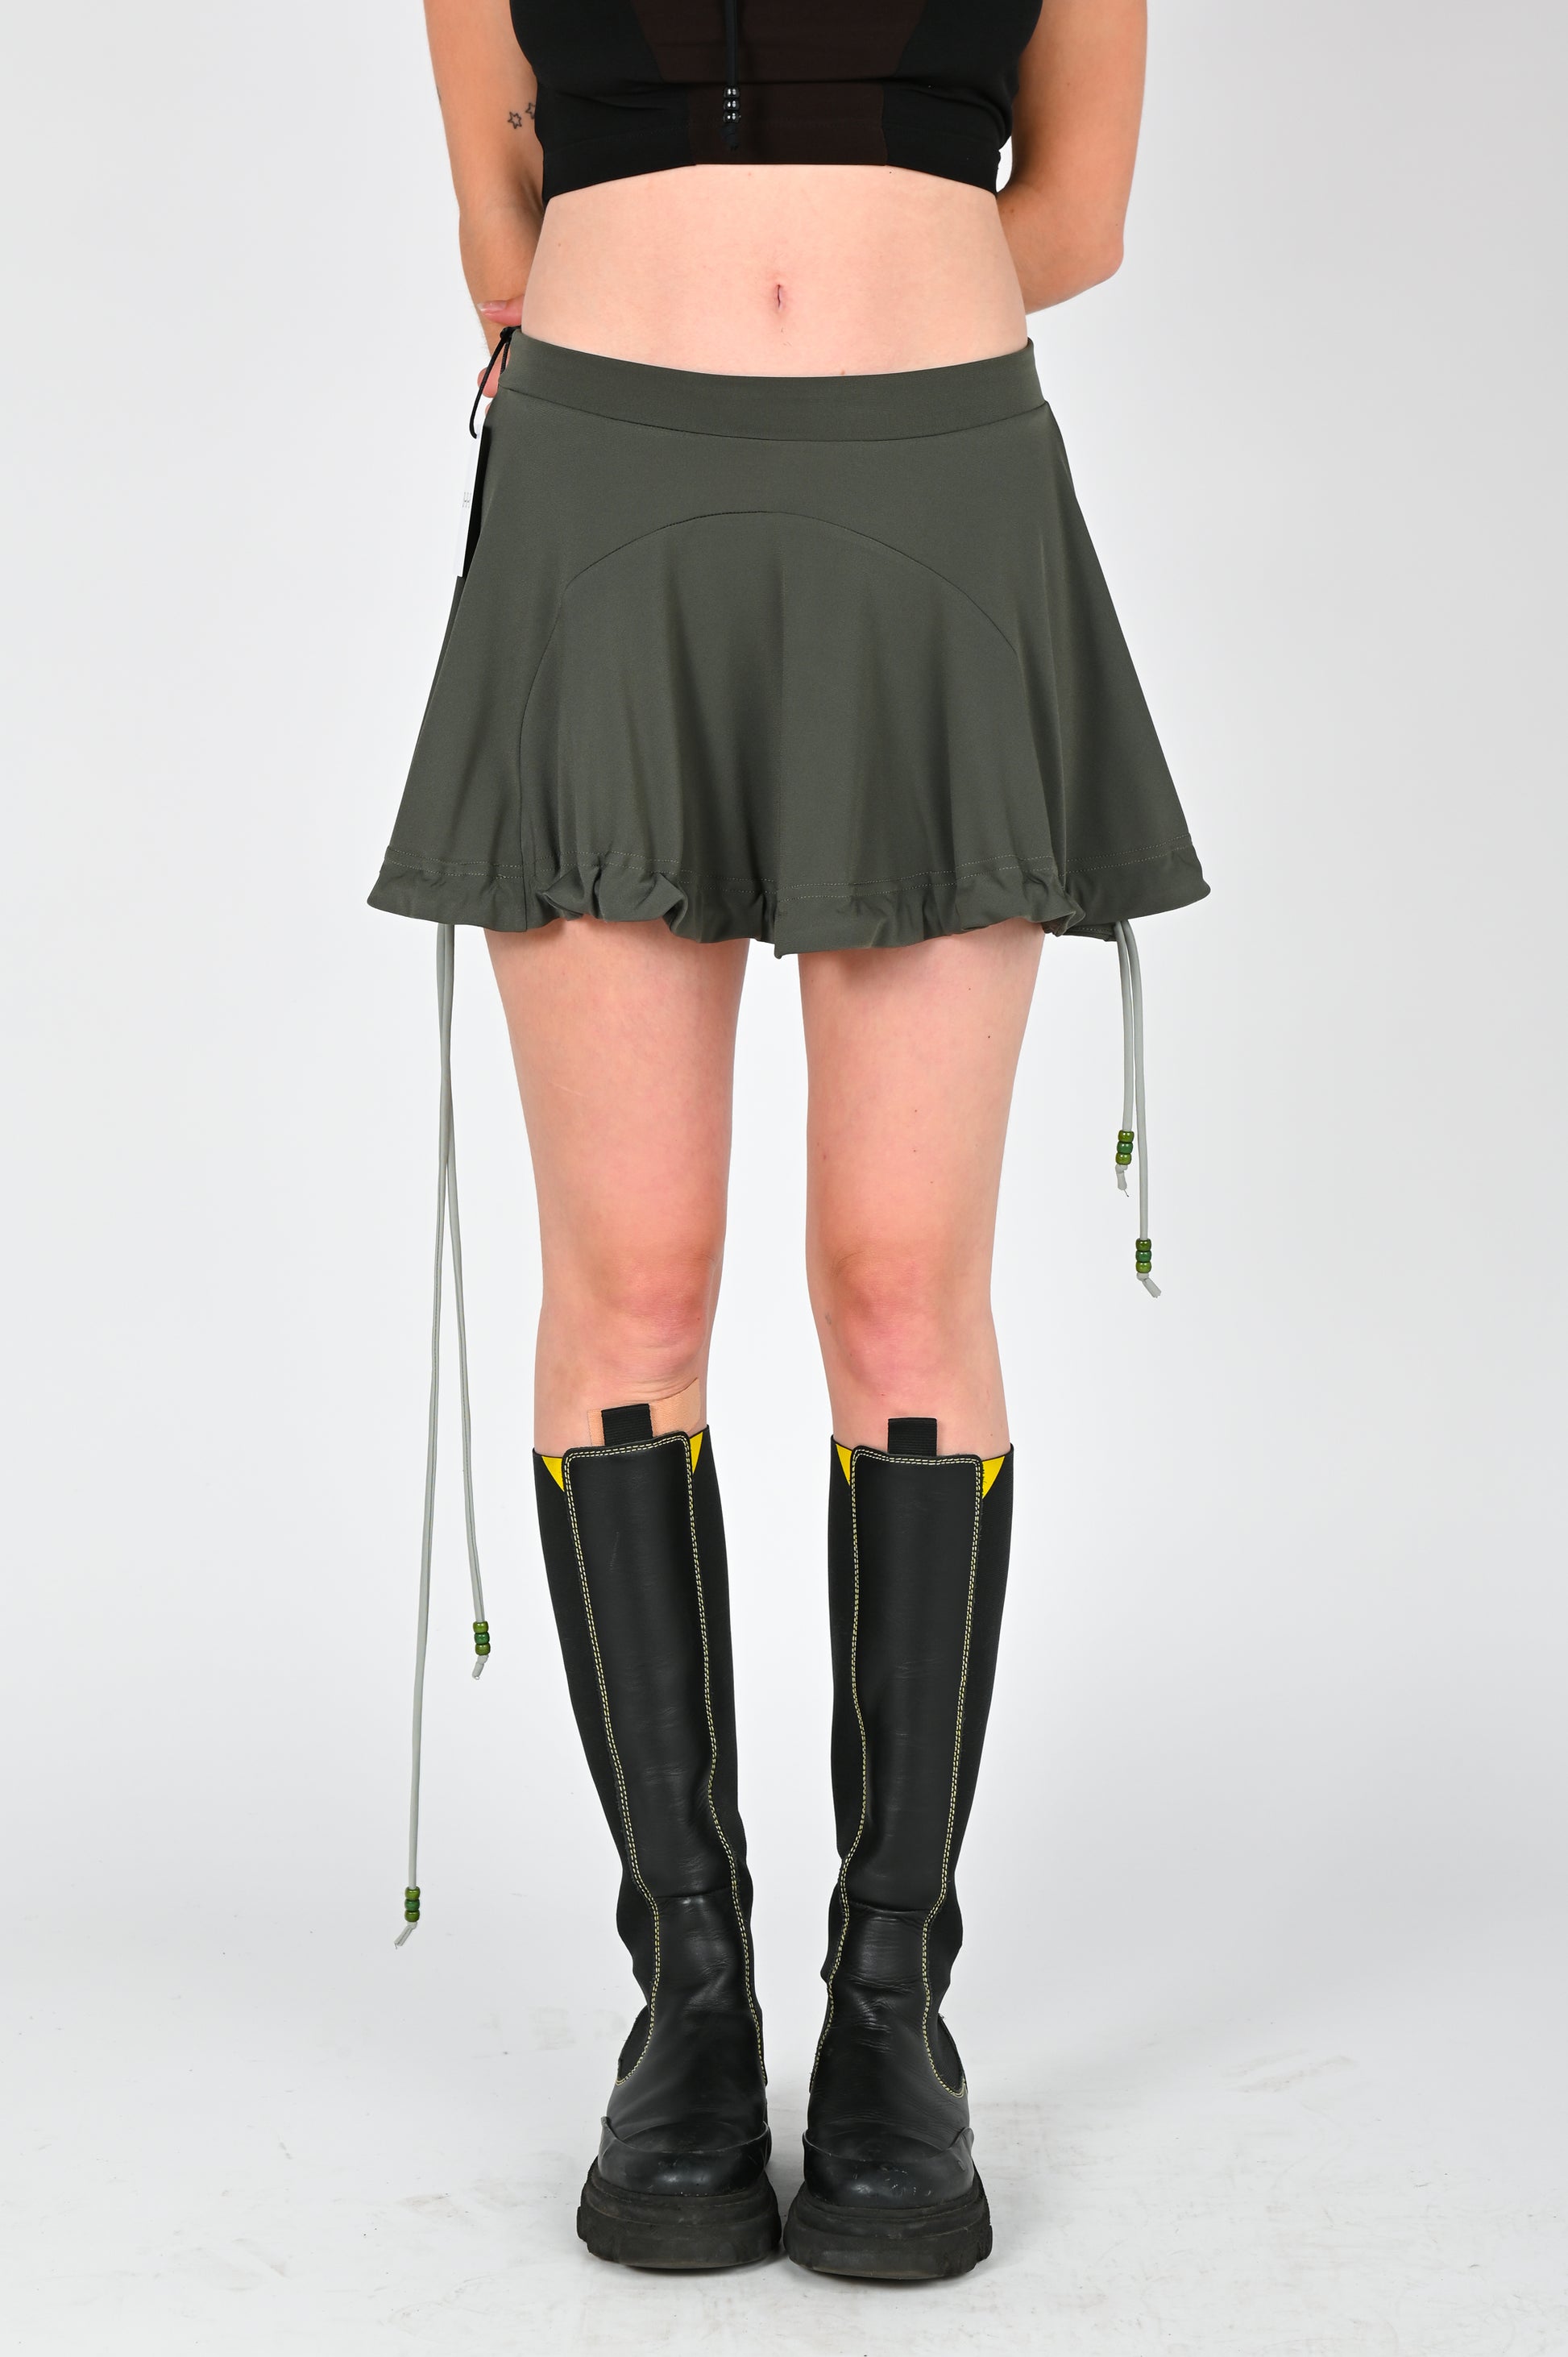 B-R-B 'Deflated Bubble' Mini Skirt in Swamp Green